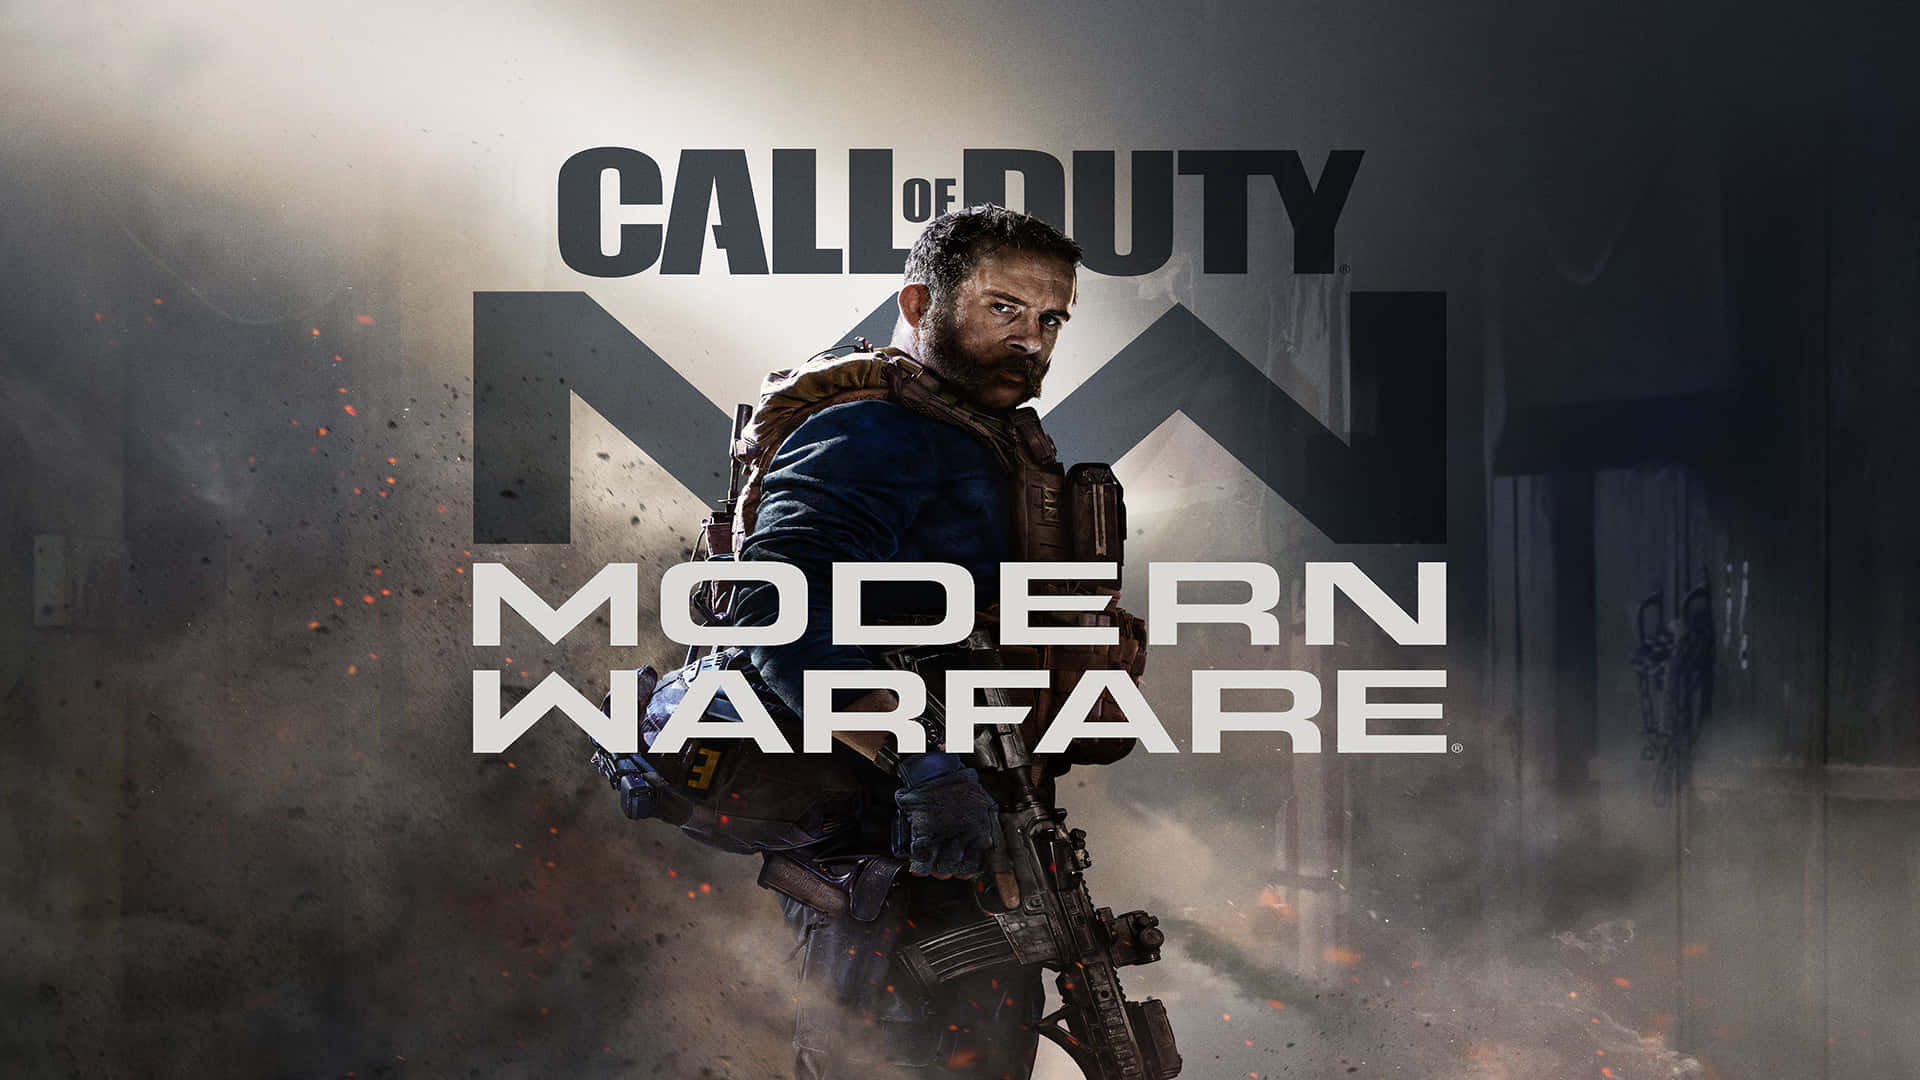 Forbered dig til intens kamp i 'Call of Duty Modern Warfare'.